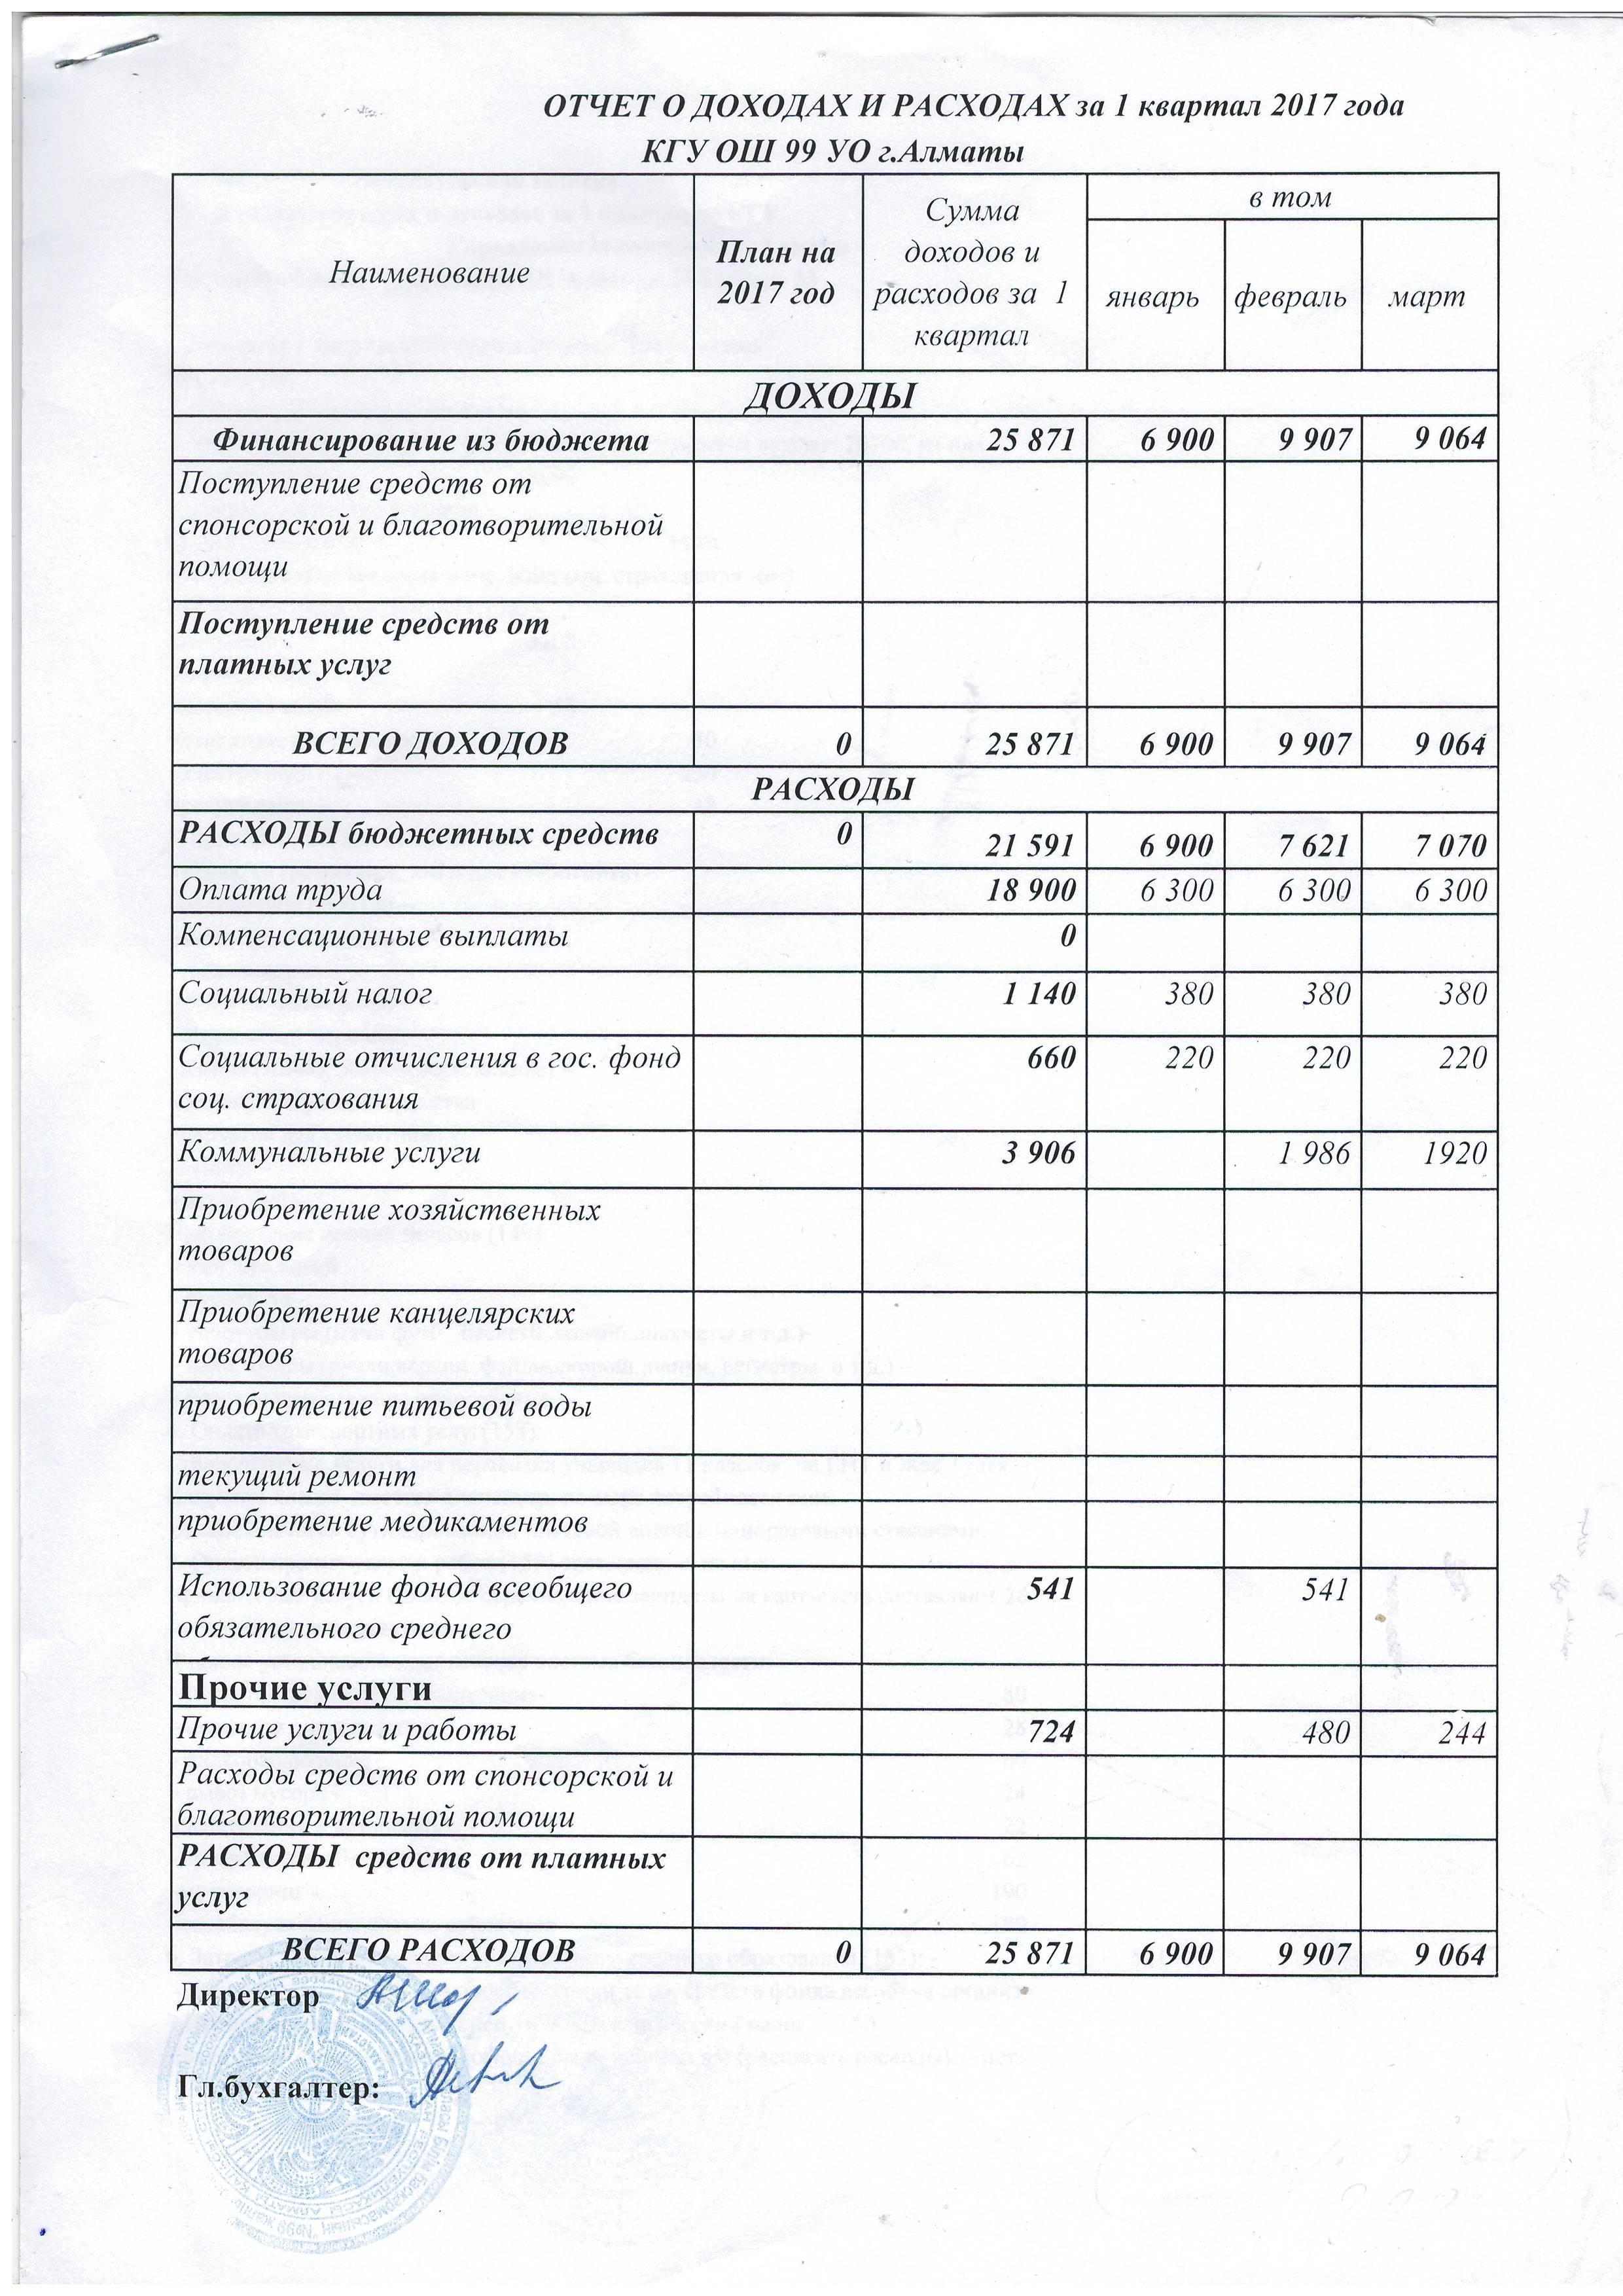 Отчет о доходах и расходах за 1 кв.2017